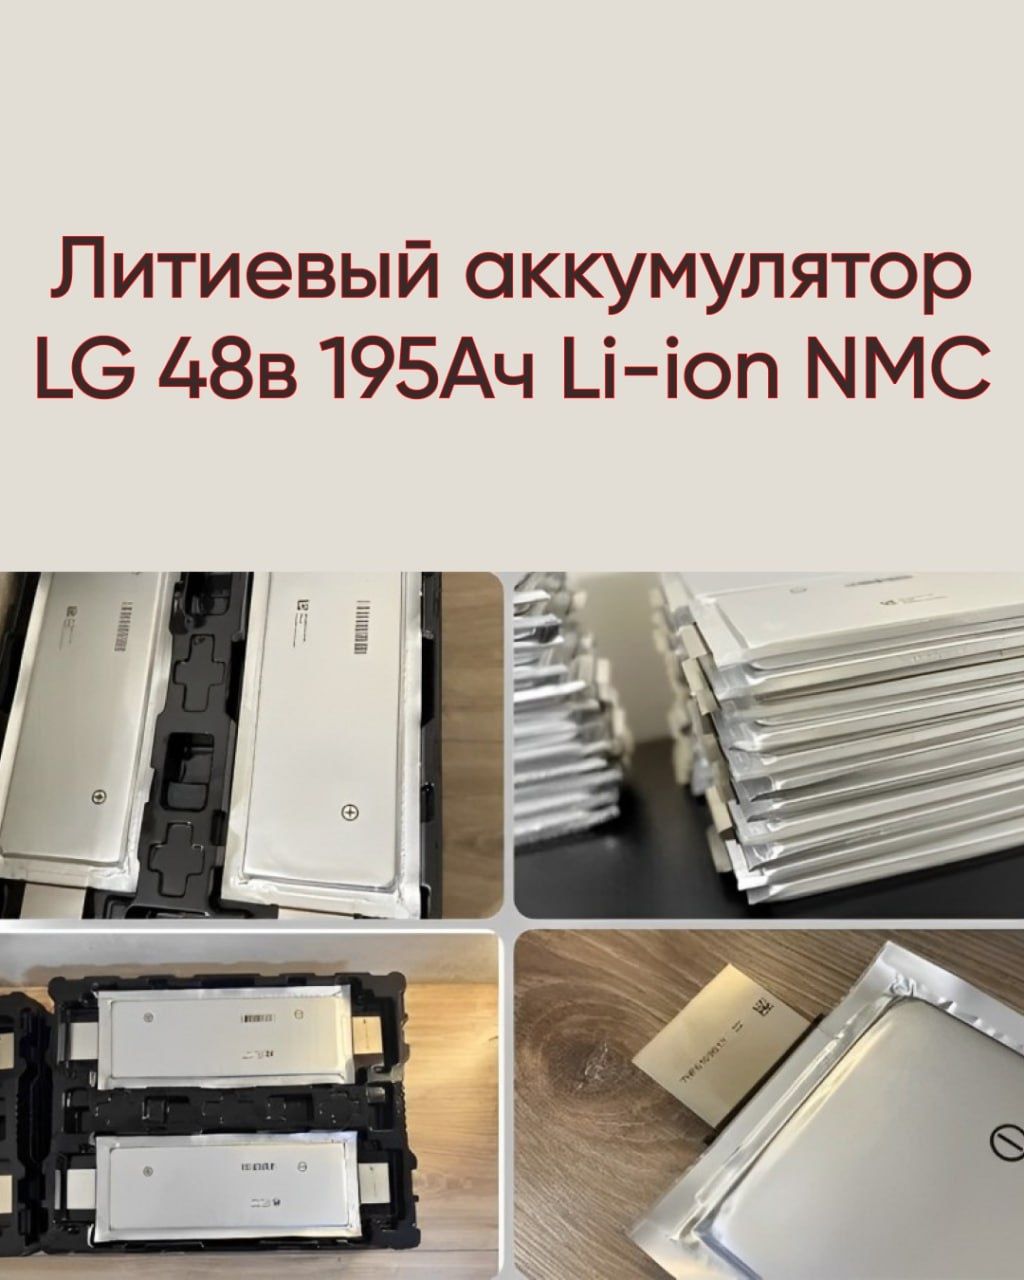 Литиевый аккумулятор LG 48V 195ah Li-ion NMC